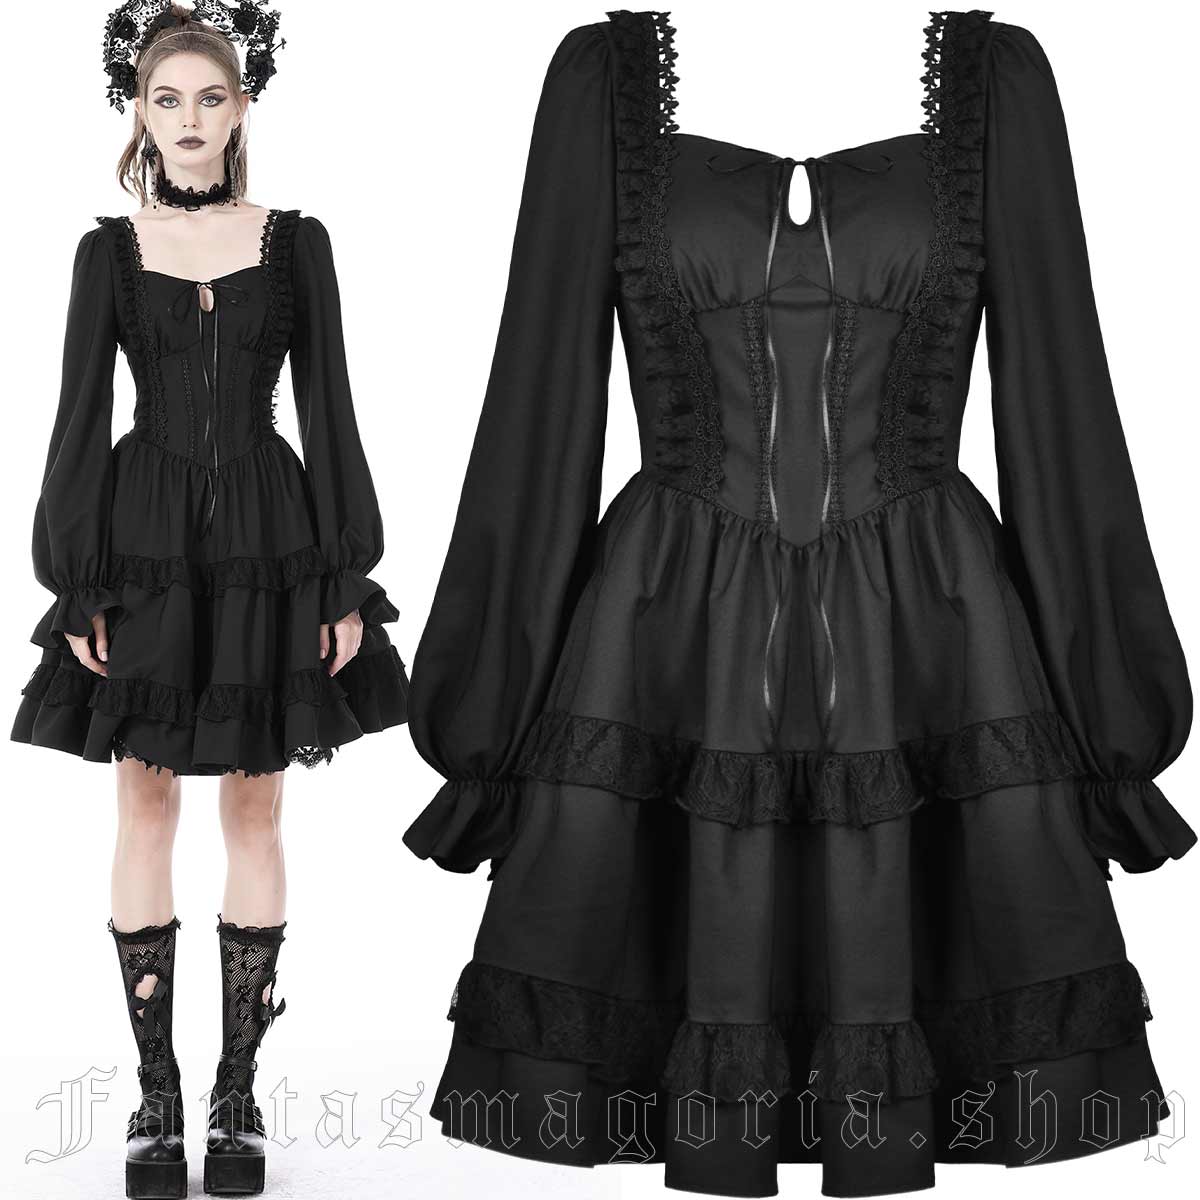 Marionette Dress - Dark in Love | Fantasmagoria.shop